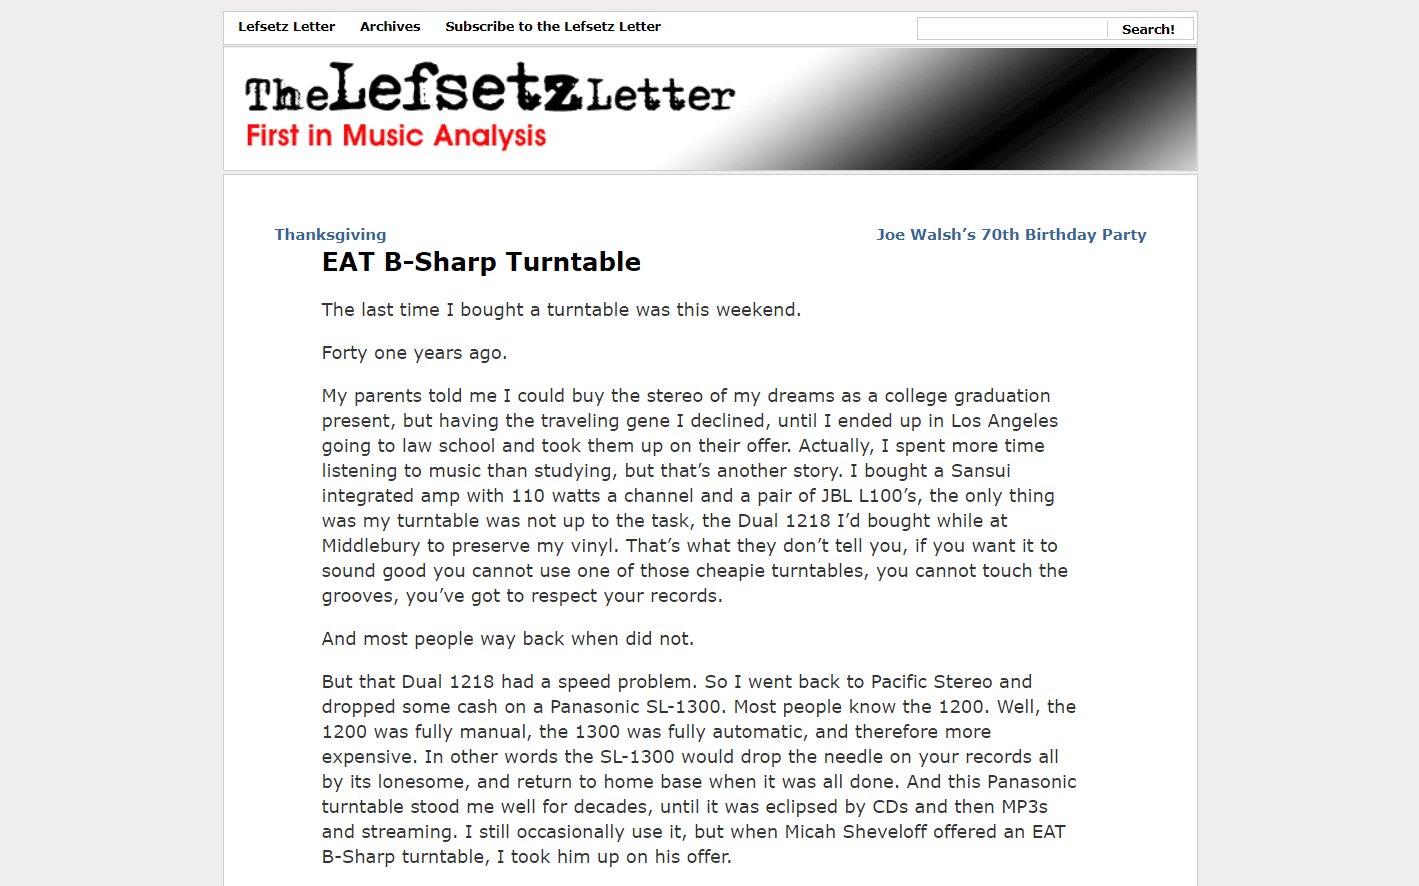 E.A.T. B-Sharp review by Lefsetz Letter